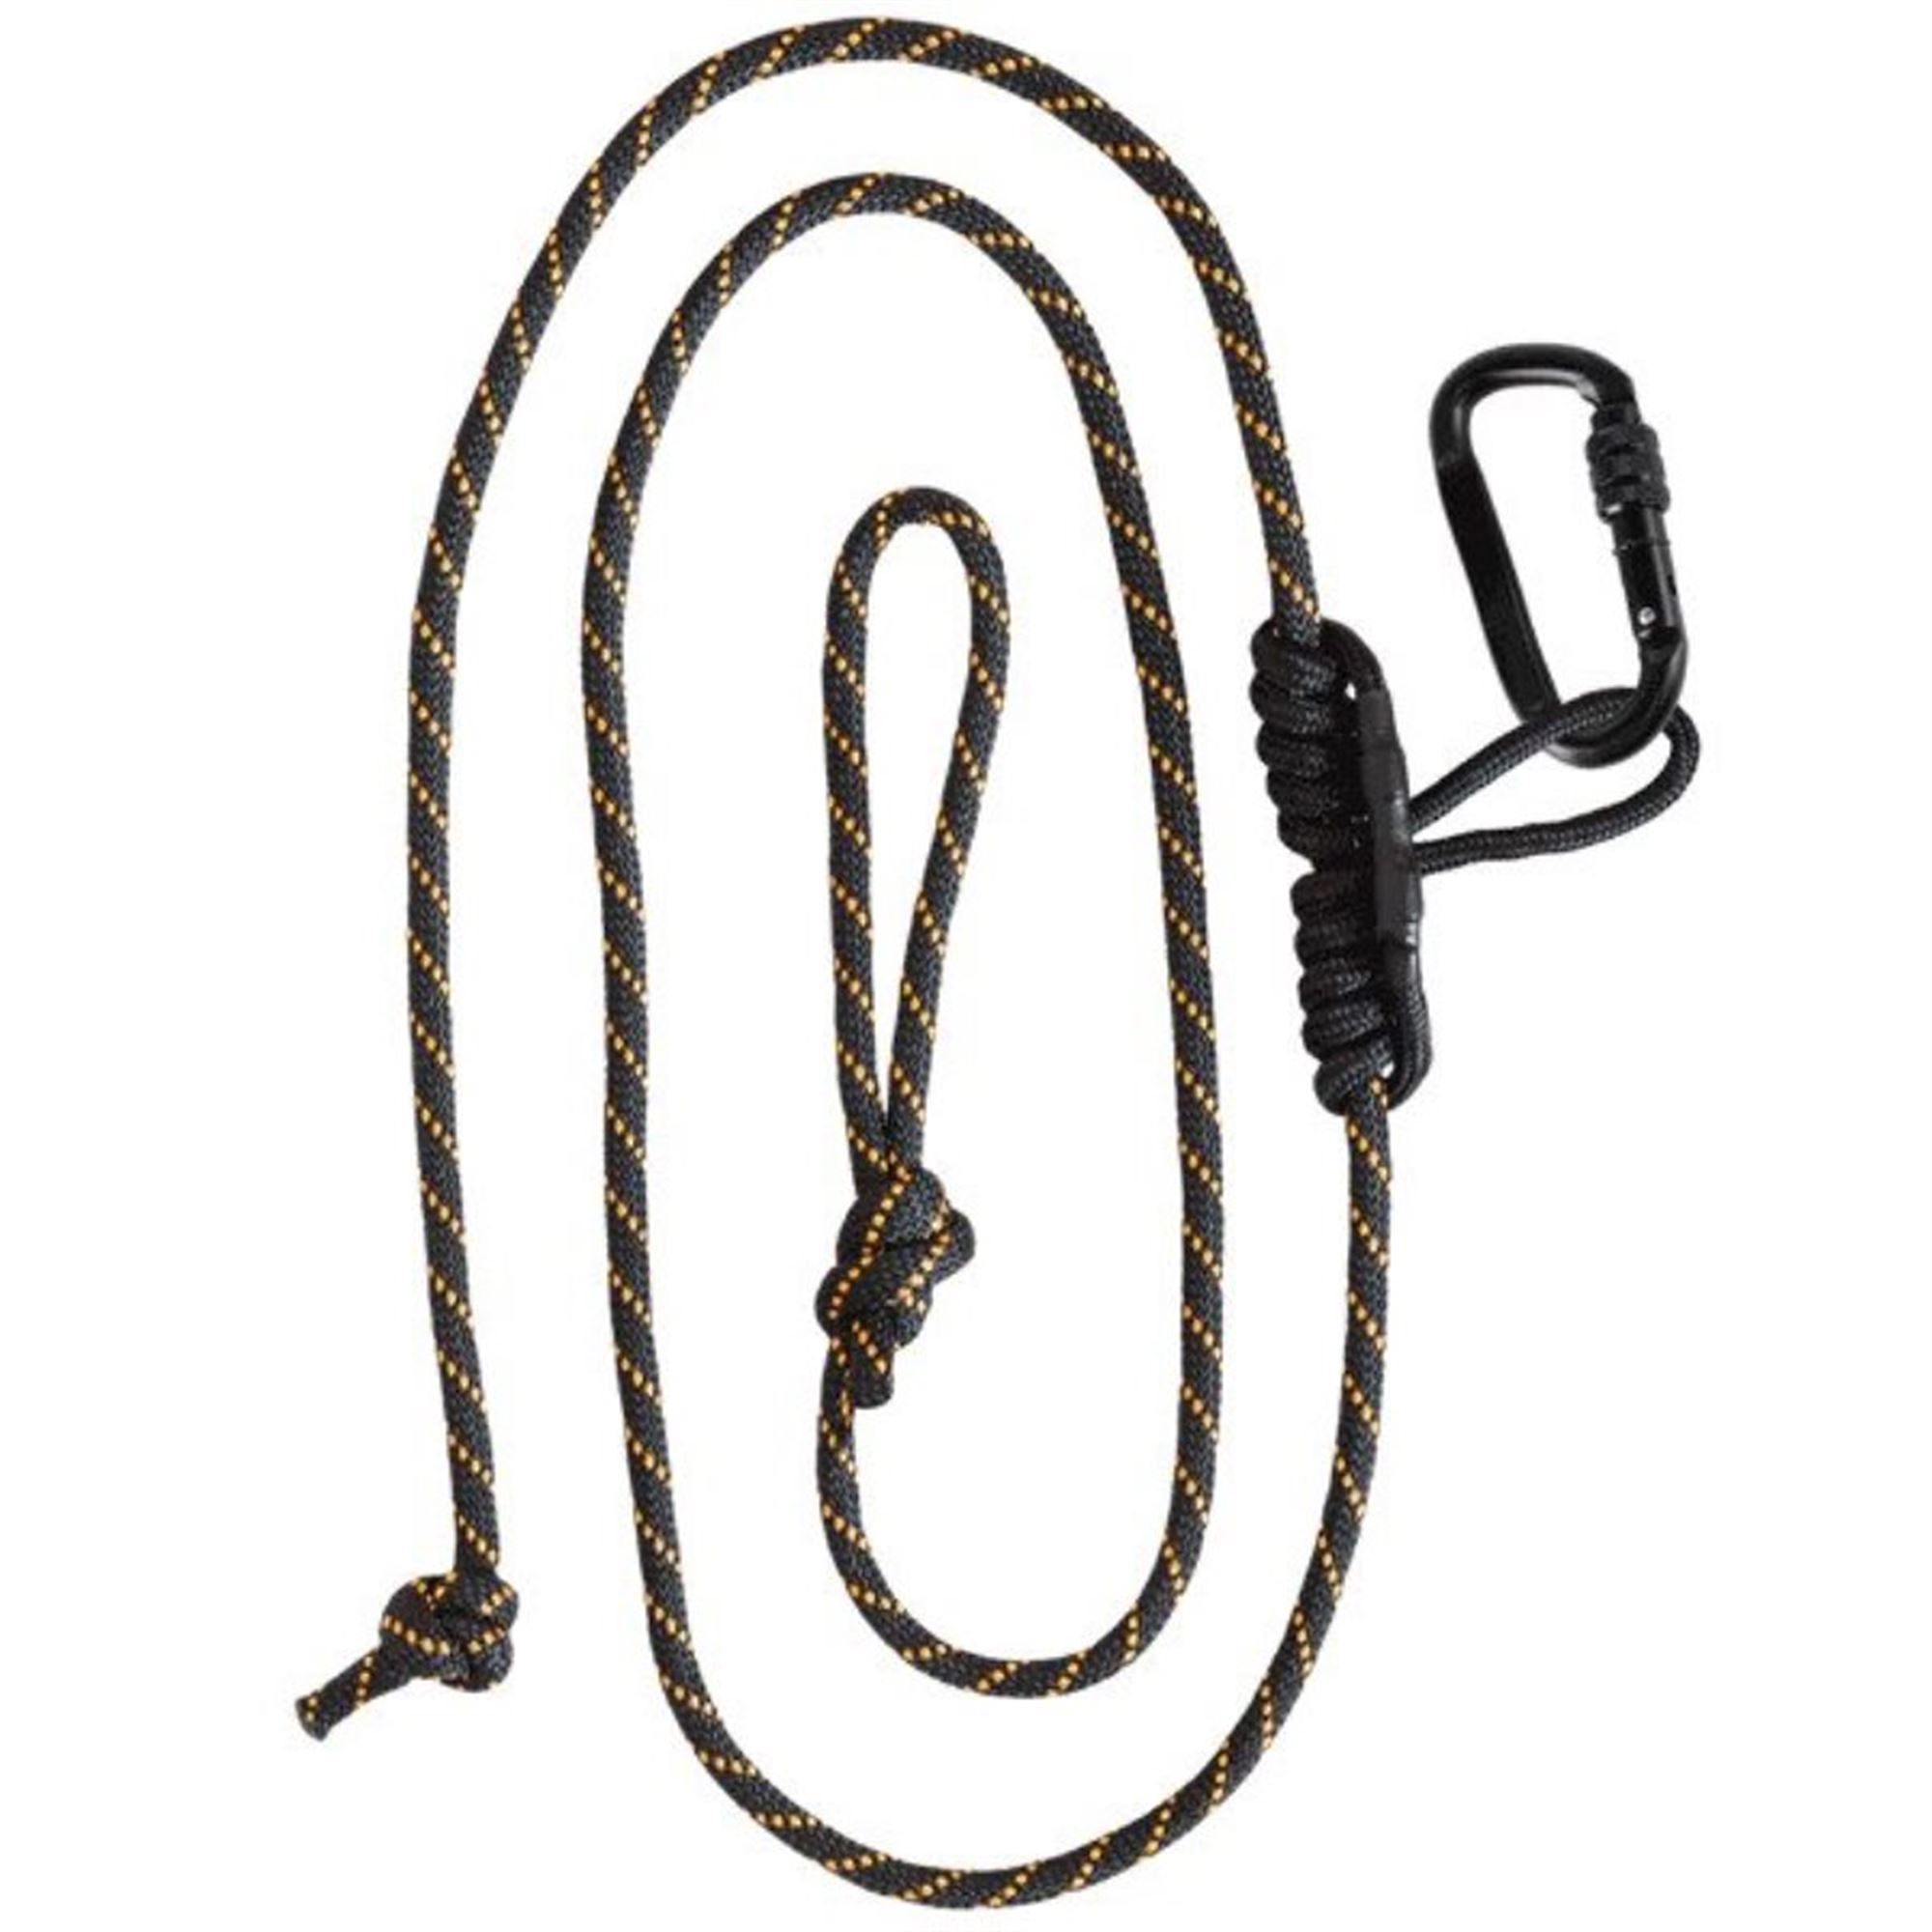 MUDDY MUD-MSA070 The Safety Harness Braided Nylon Lineman's Rope